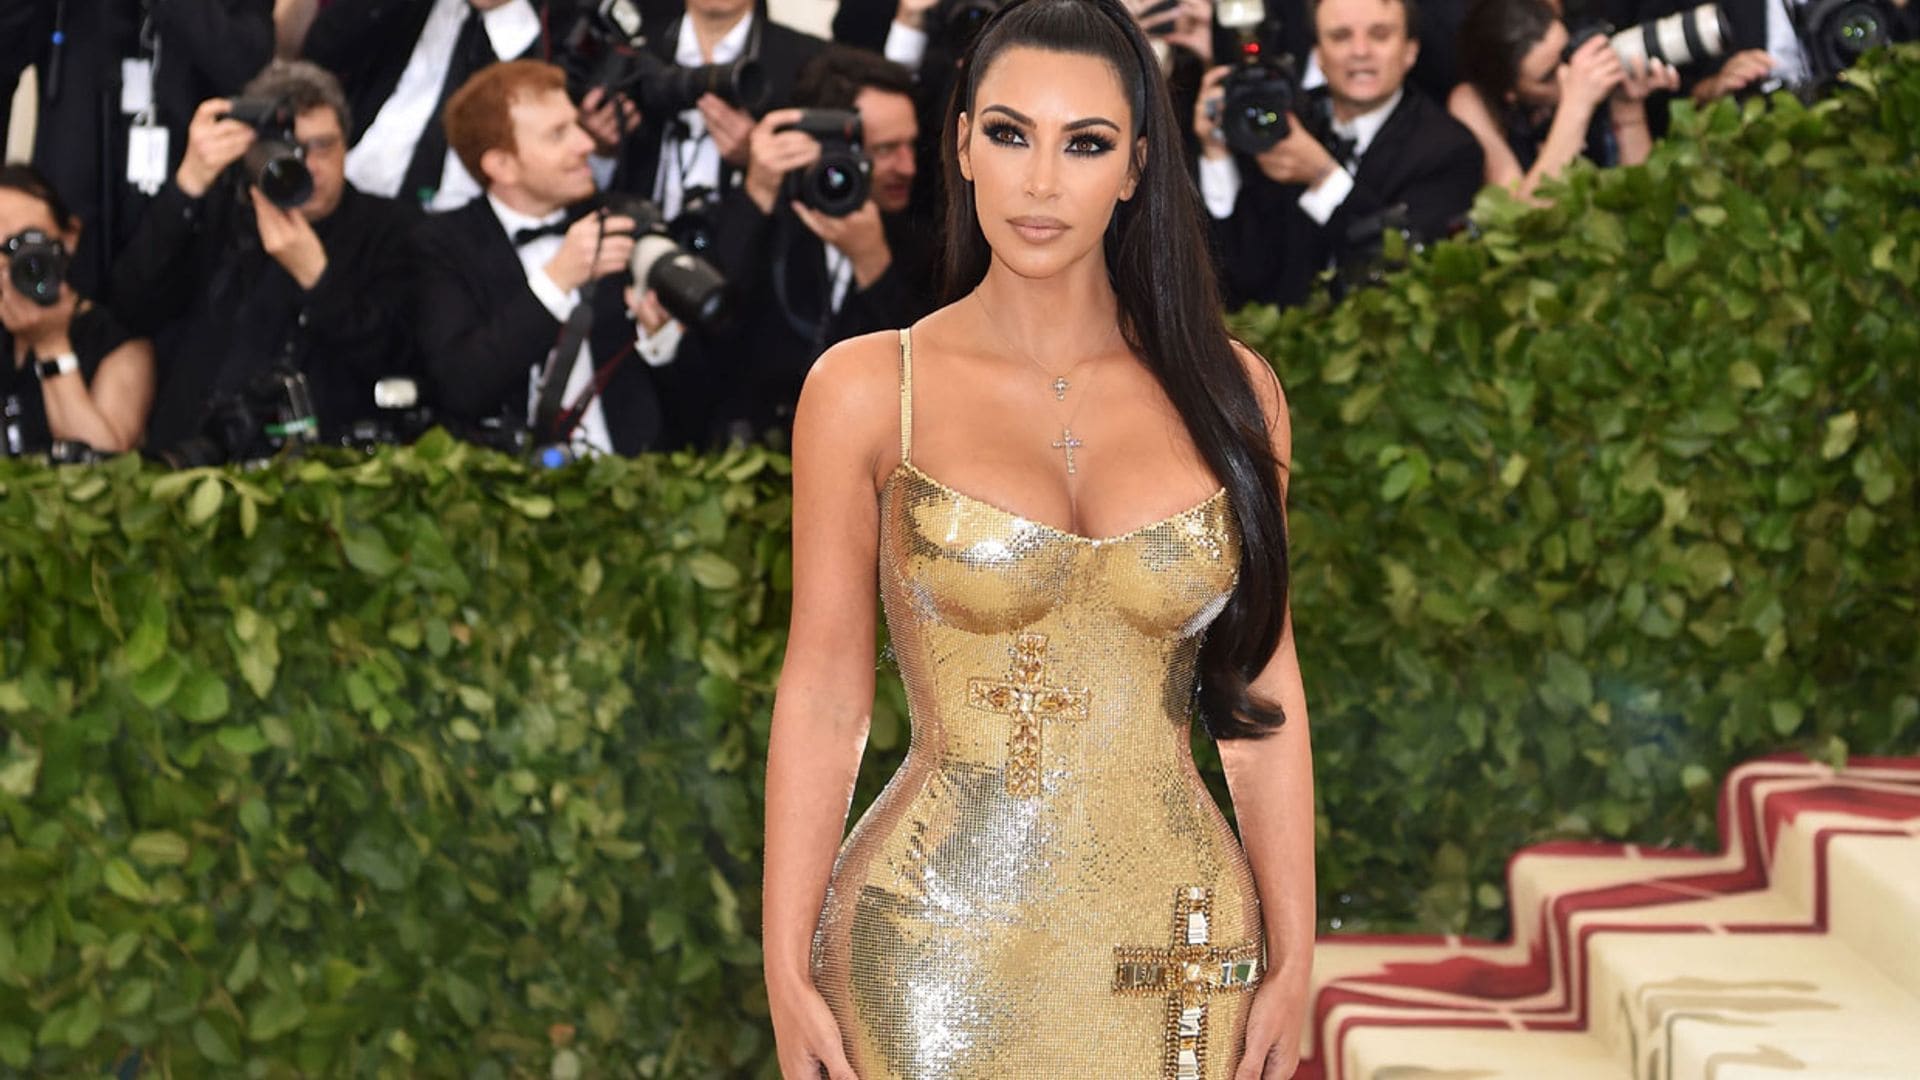 De estrella de 'reality' a empresaria, así ha conseguido Kim Kardashian el premio 'Fashion Icon'